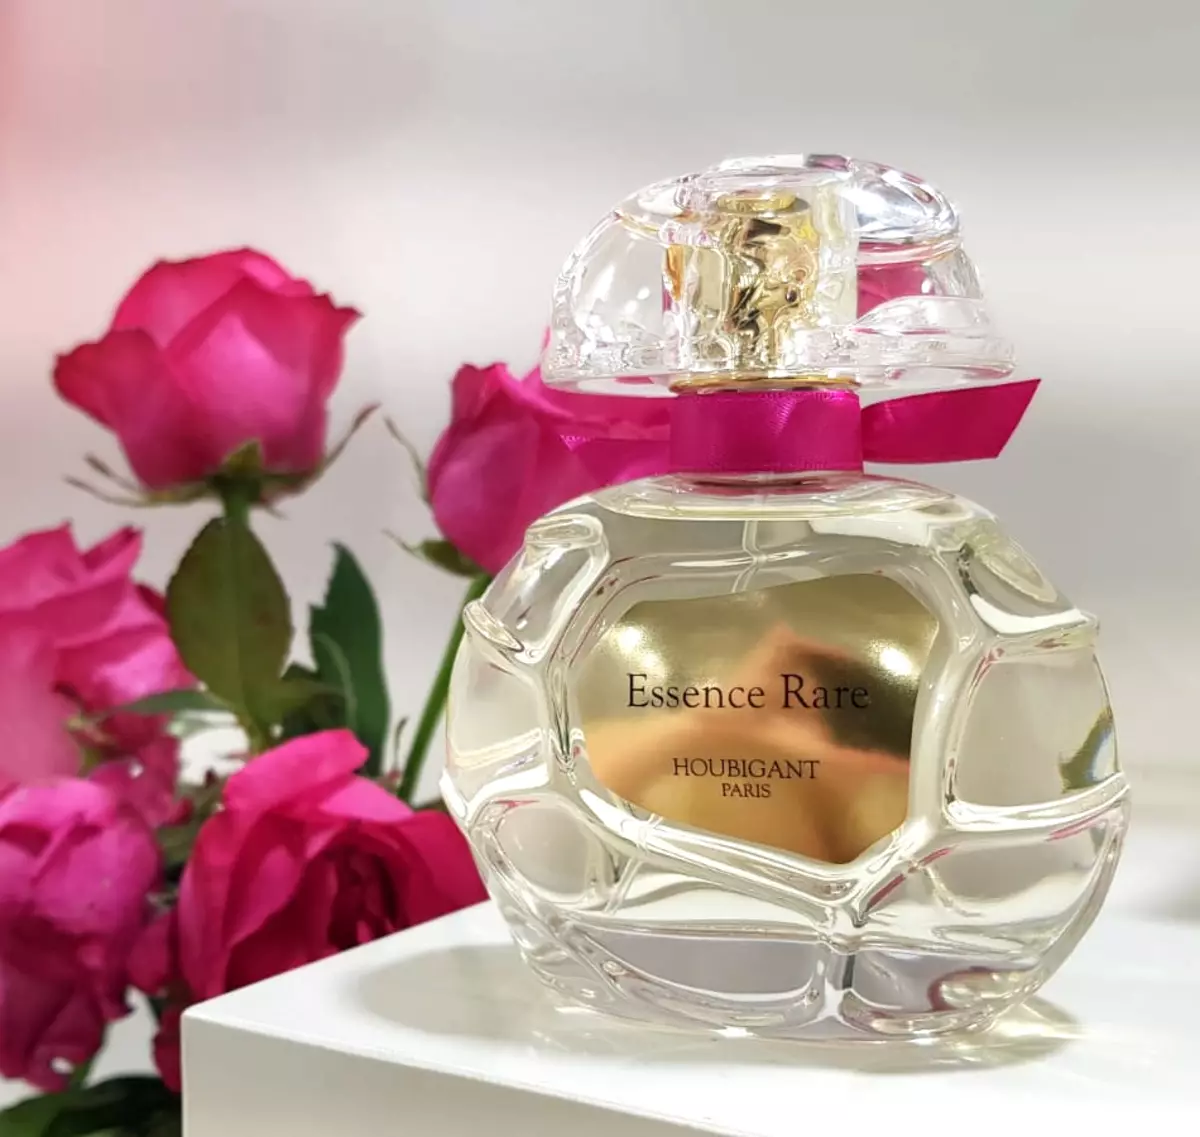 Parfum Houbigant: Quelques Fleurs Royale dhe Thelbi i rrallë, Orangers en Fleurs dhe Iris des Champs, Fougere Royale dhe Cologne intensive, Apercu dhe flavors të tjera 25165_3